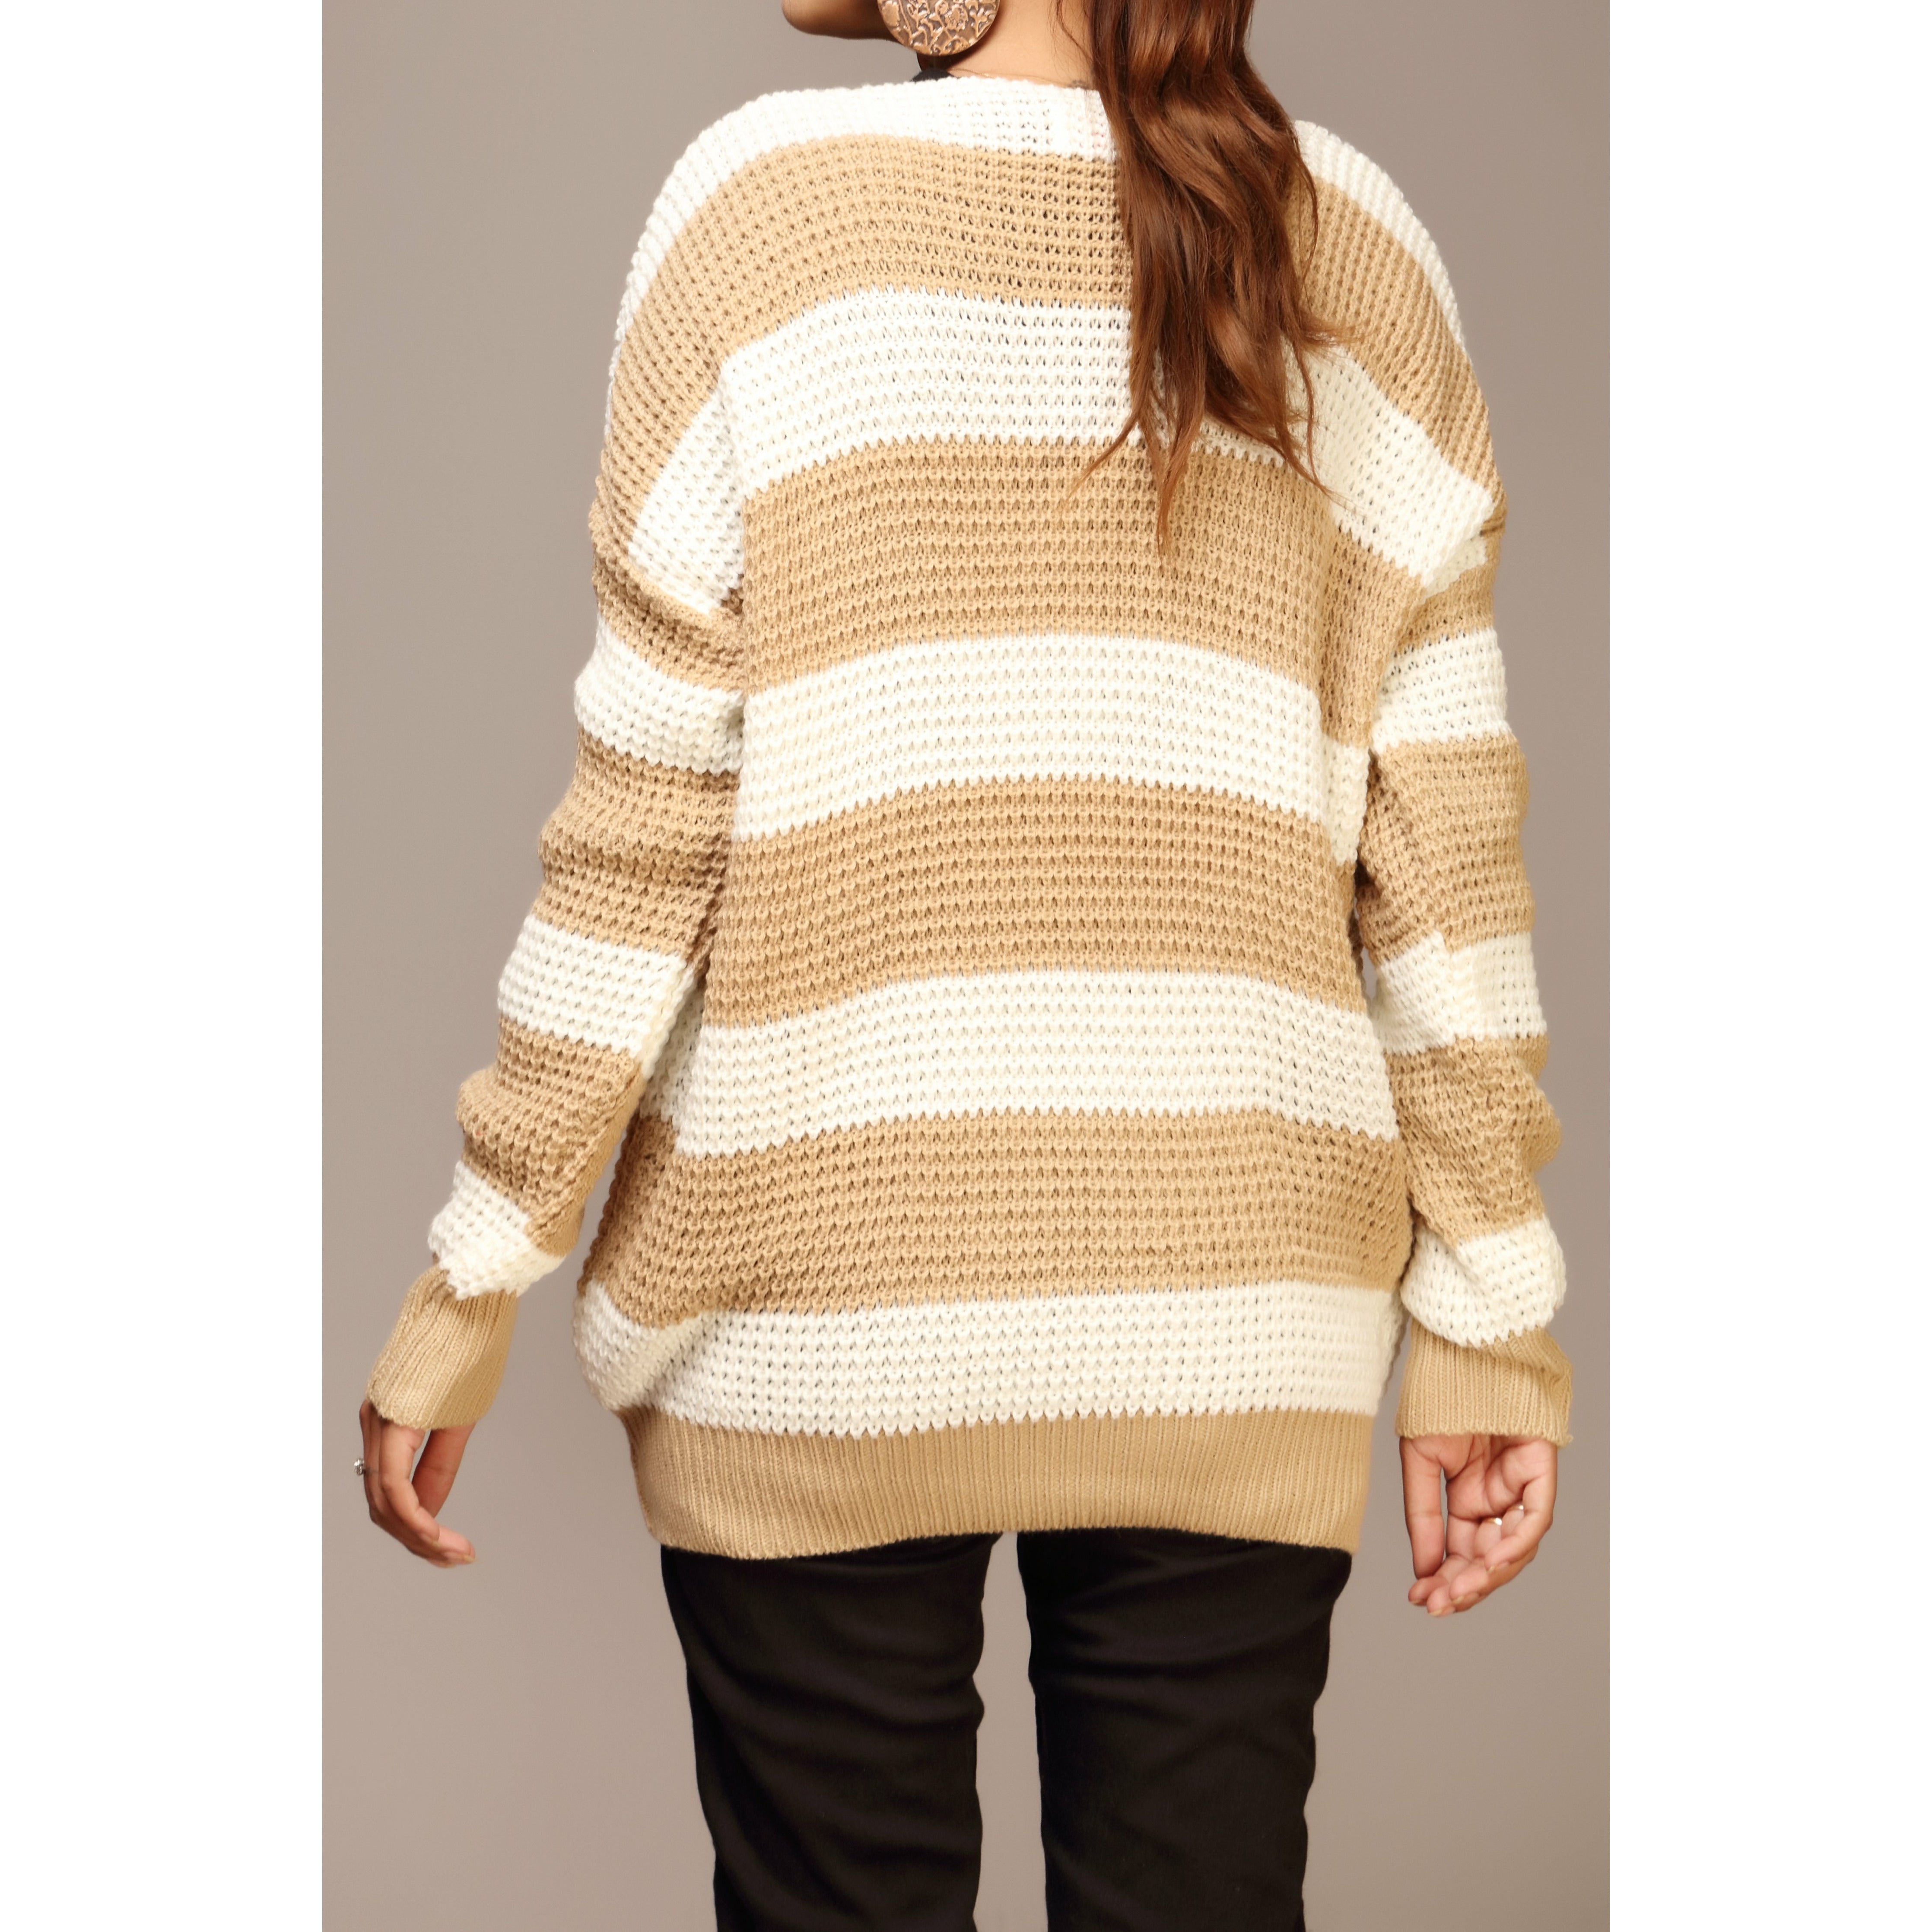 Beige Color V-Neck Pullover Sweater PW1910